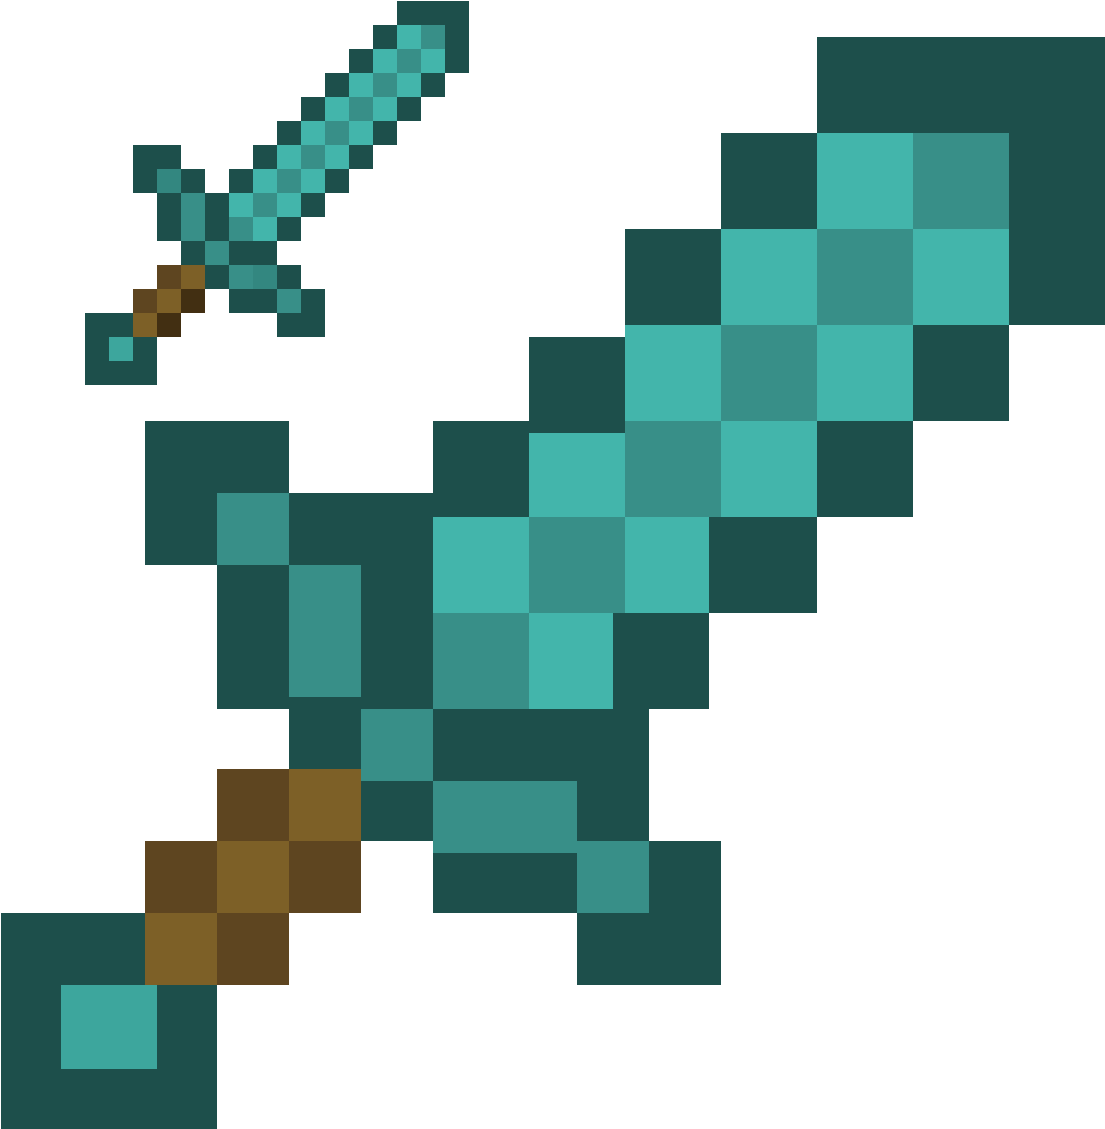 minecraft diamond sword transparent background